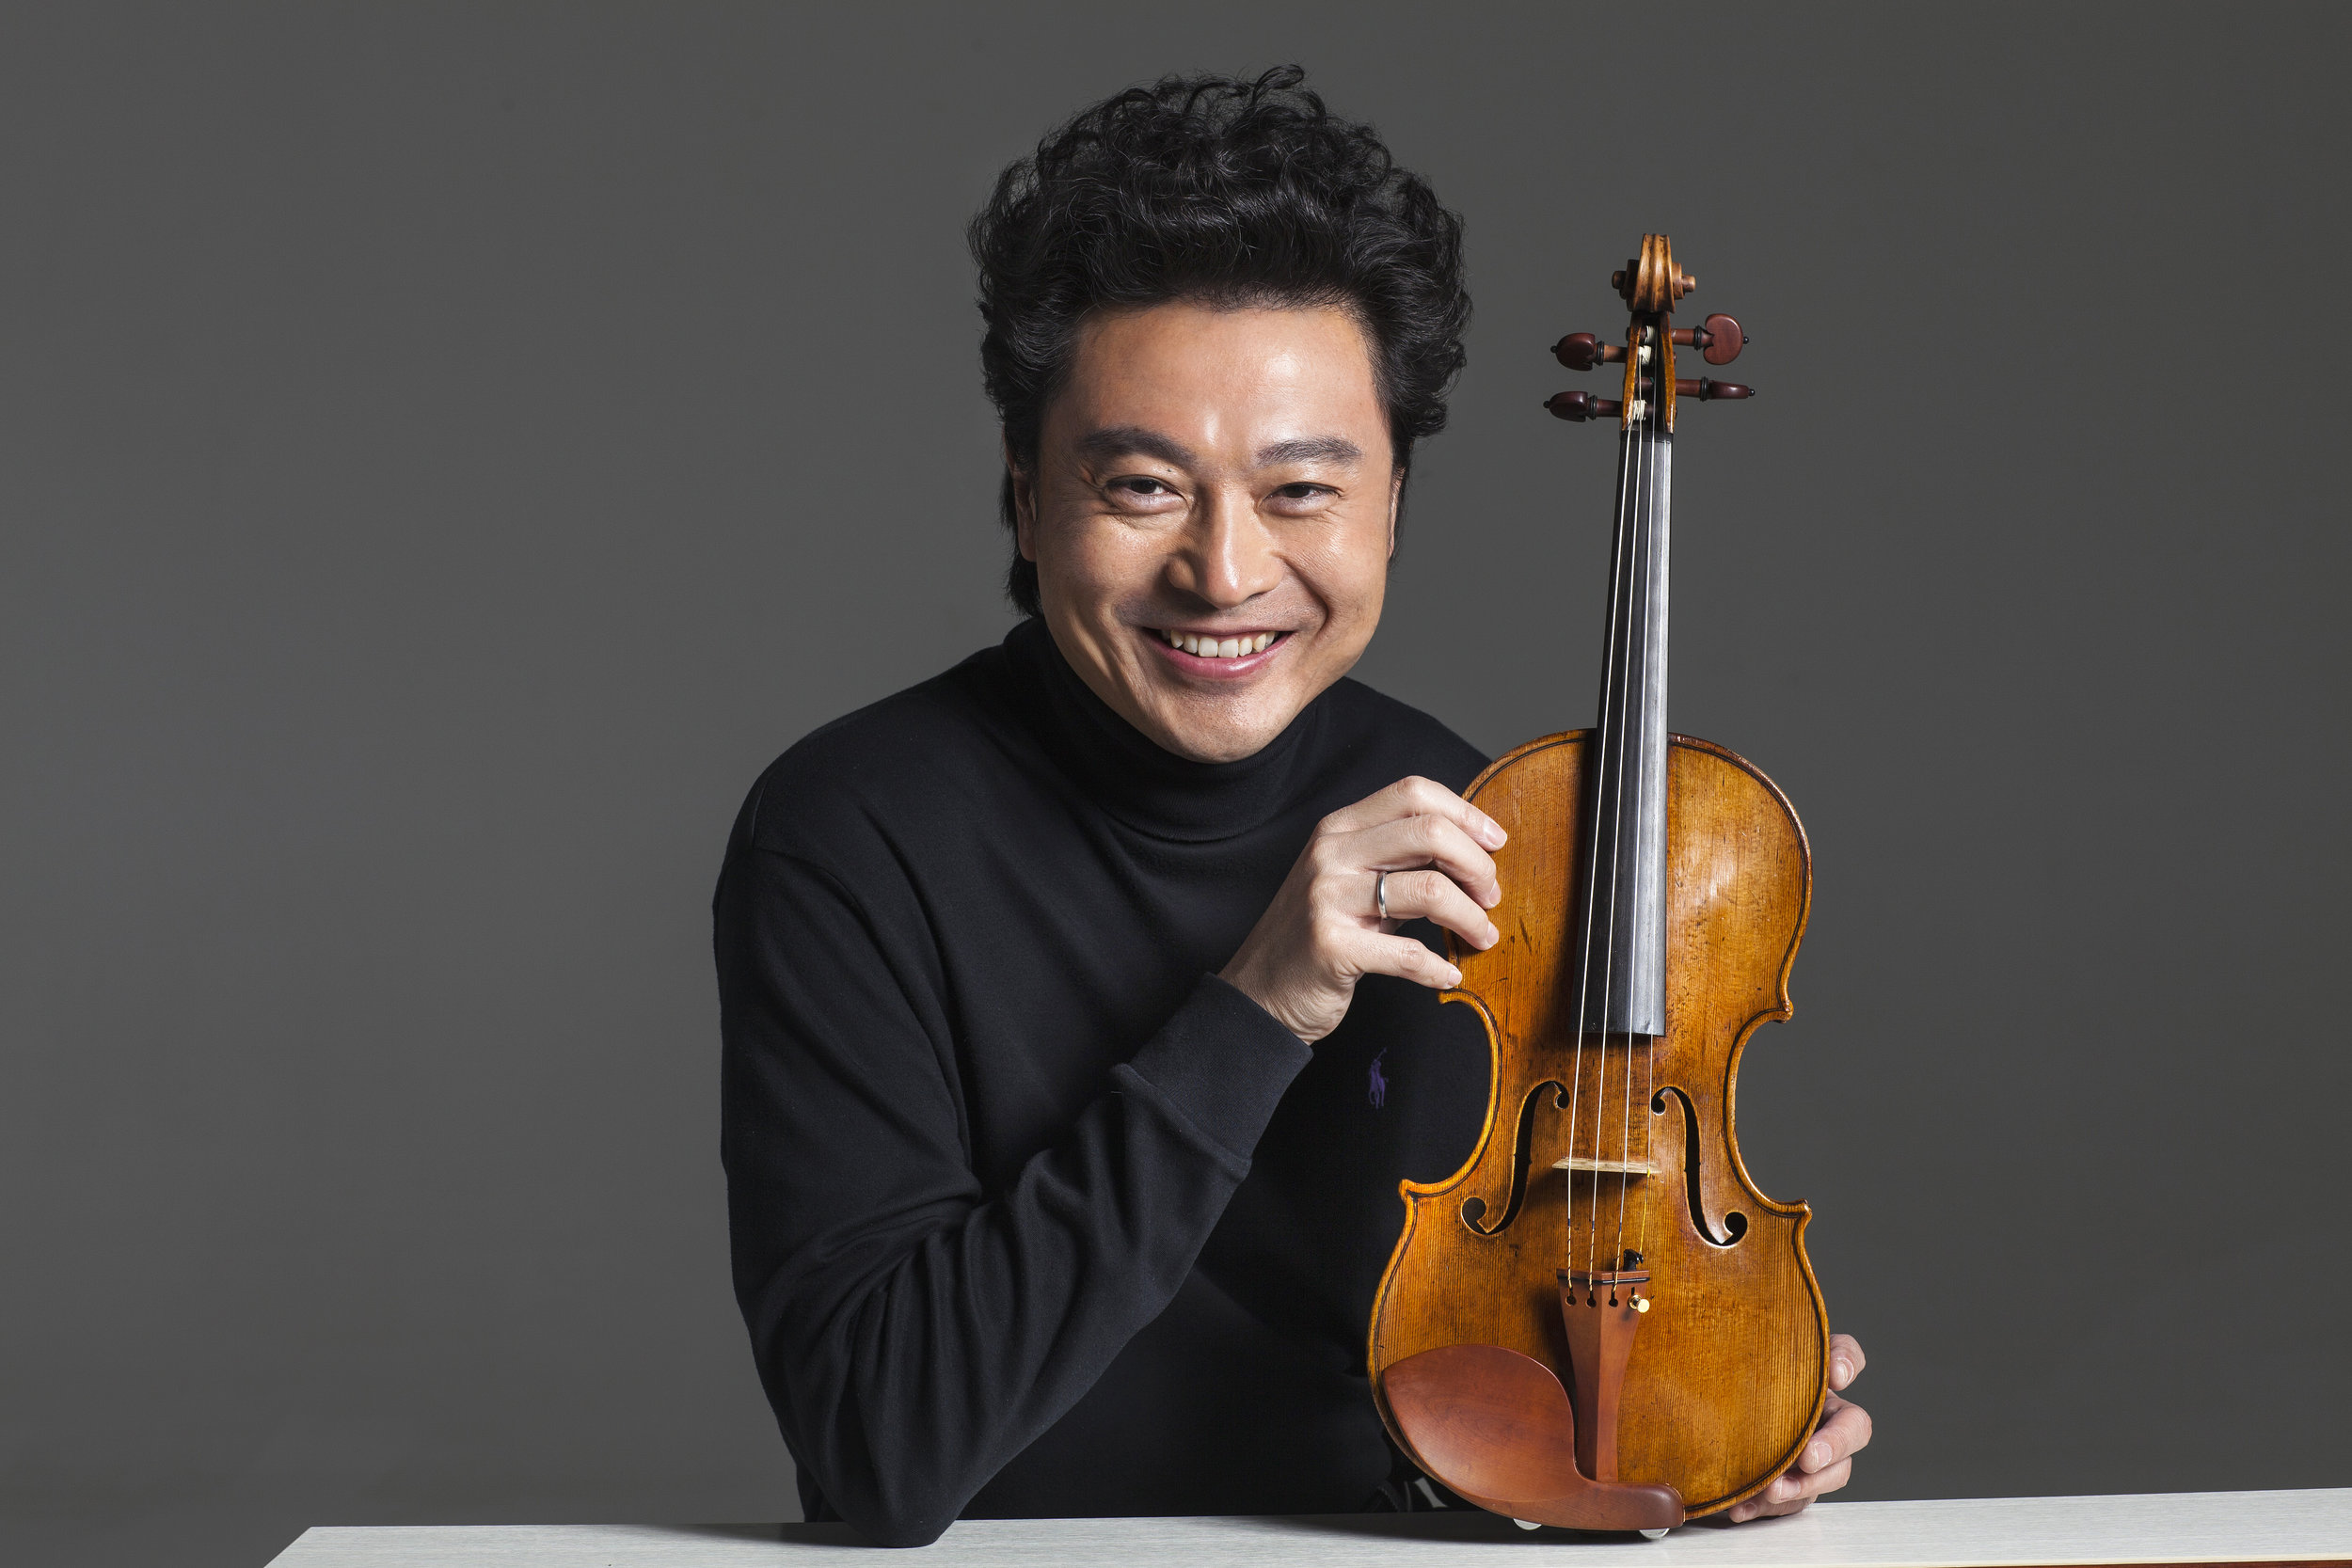  小提琴 吕思清  Violin Siqing Lu 